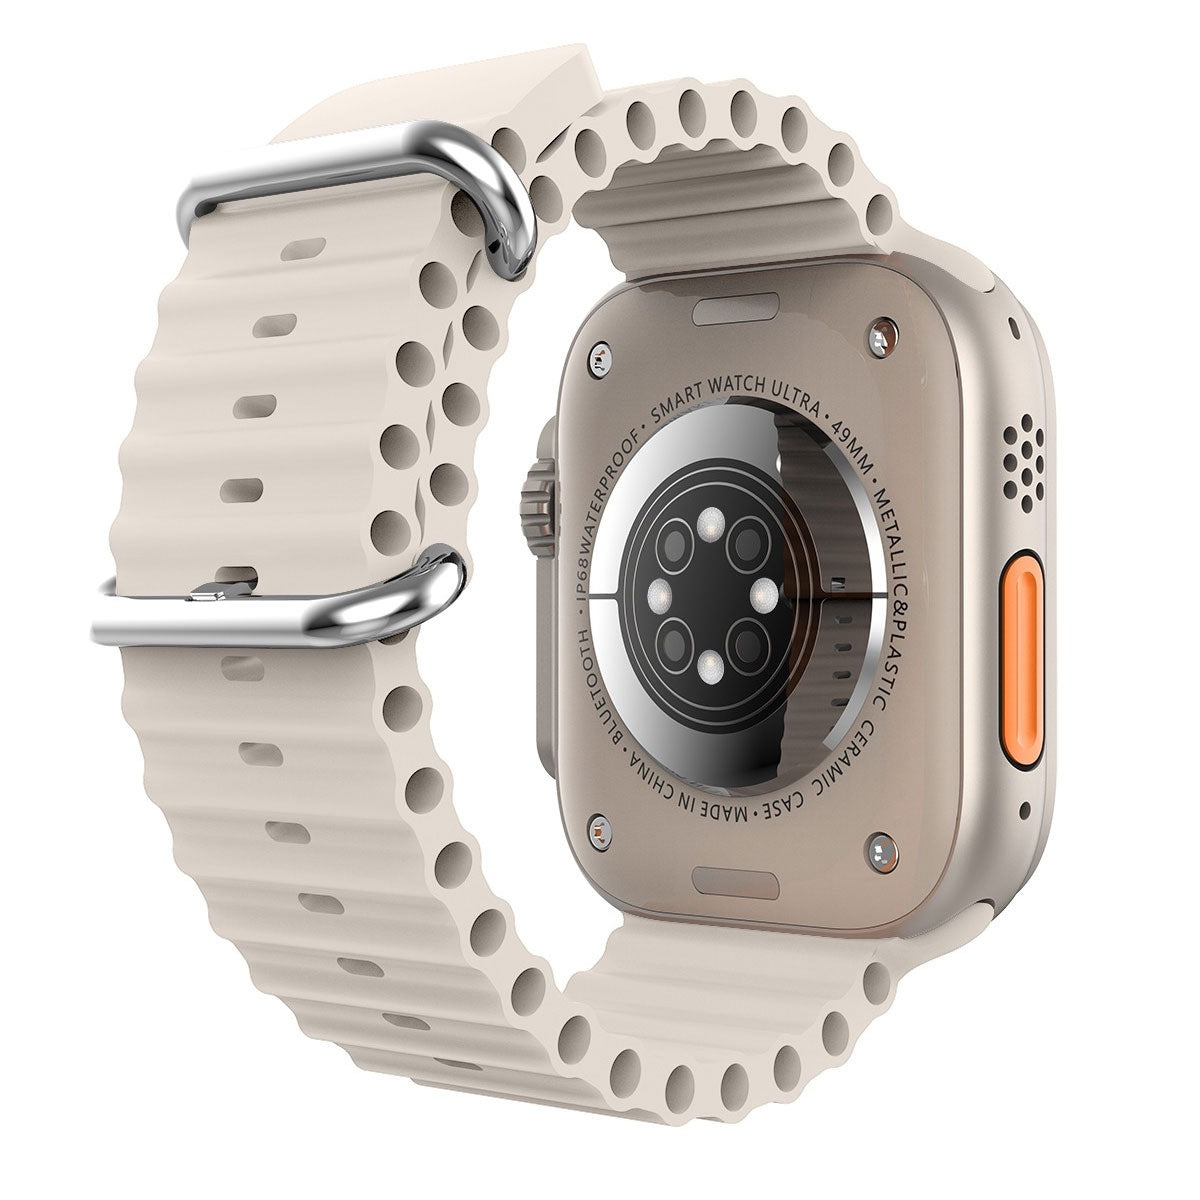 Smartwatch Reloj Inteligente Fralugio GS Ultra 9 Max Pantalla AMOLED